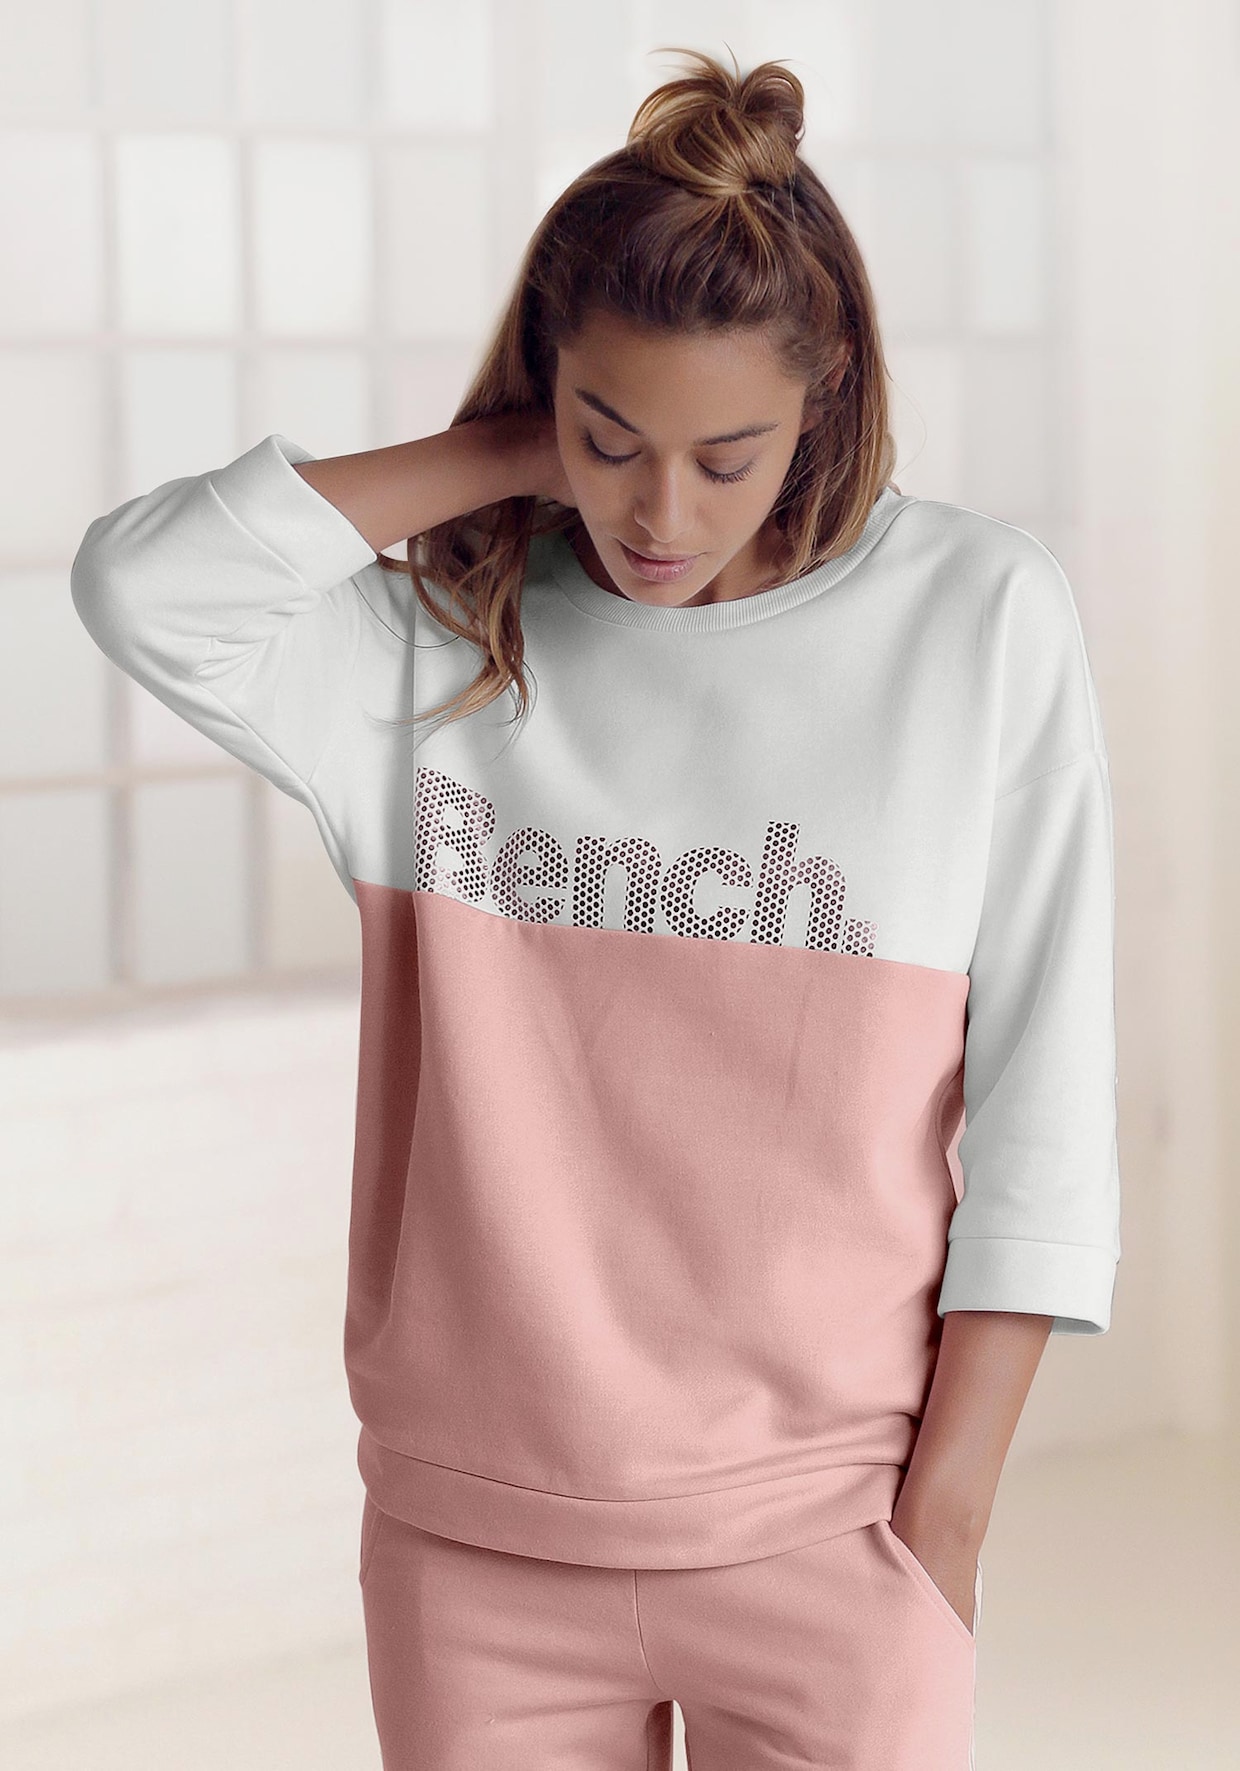 Bench. Sweatshirt - apricot-ecru